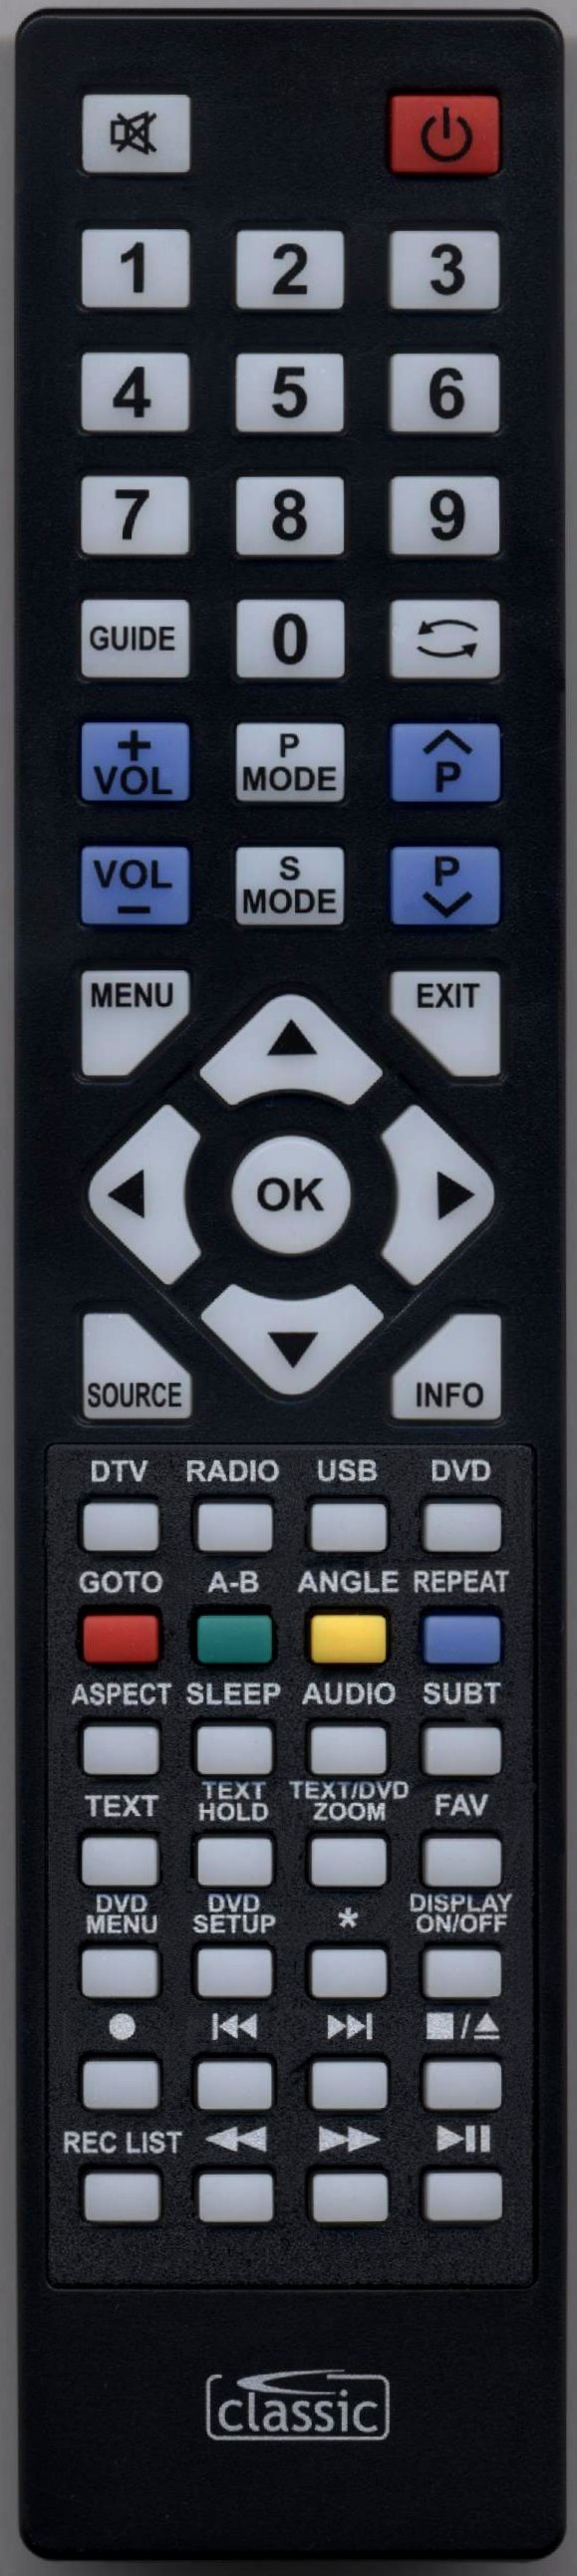 BLAUPUNKT 185/207I-GB-HKUPS-UK Remote Control